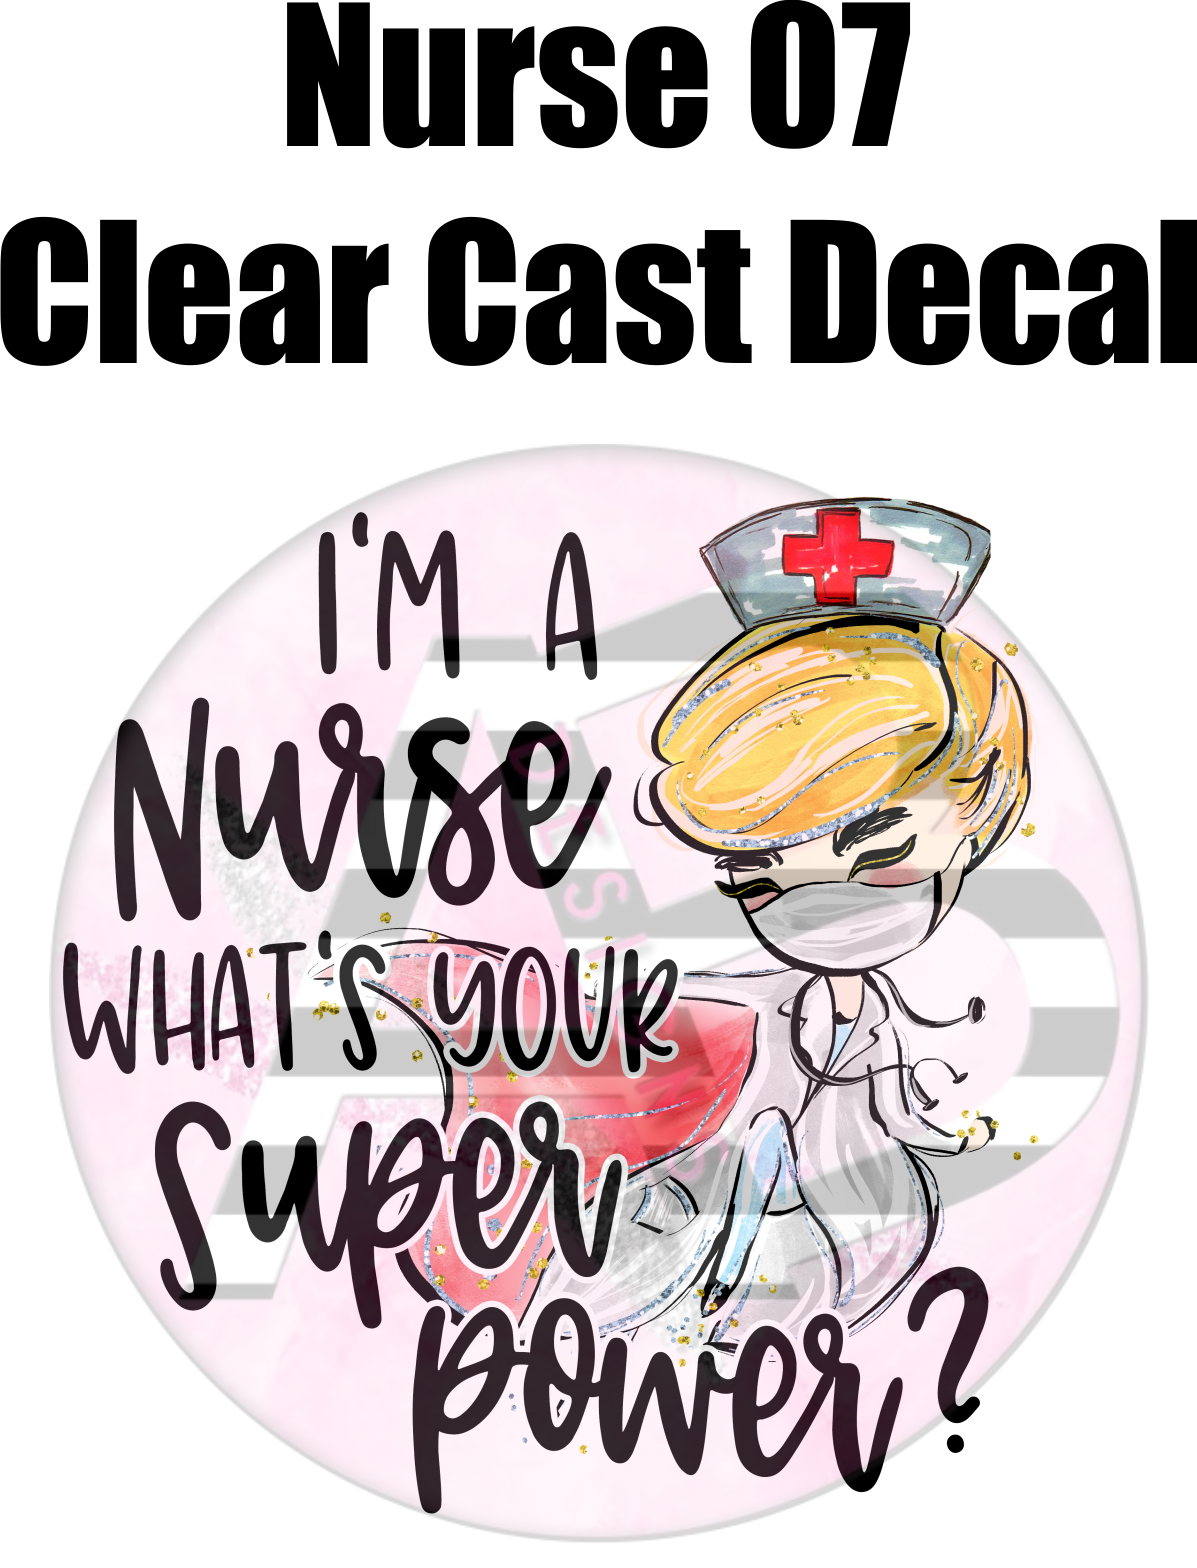 Nurse 07 - Clear Cast Decal